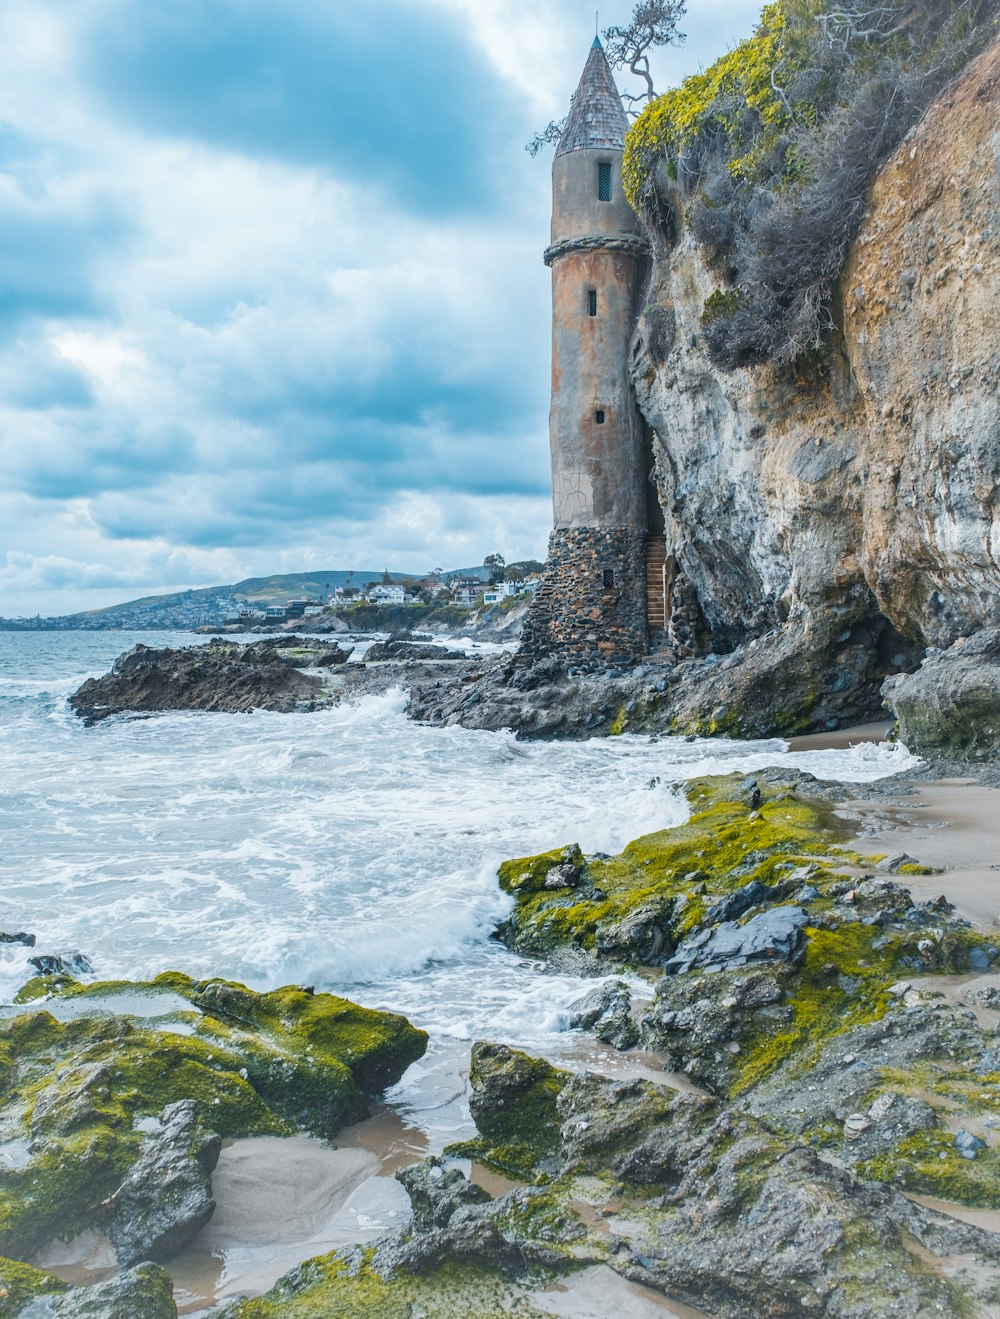 a tower on a cliff near the ocean